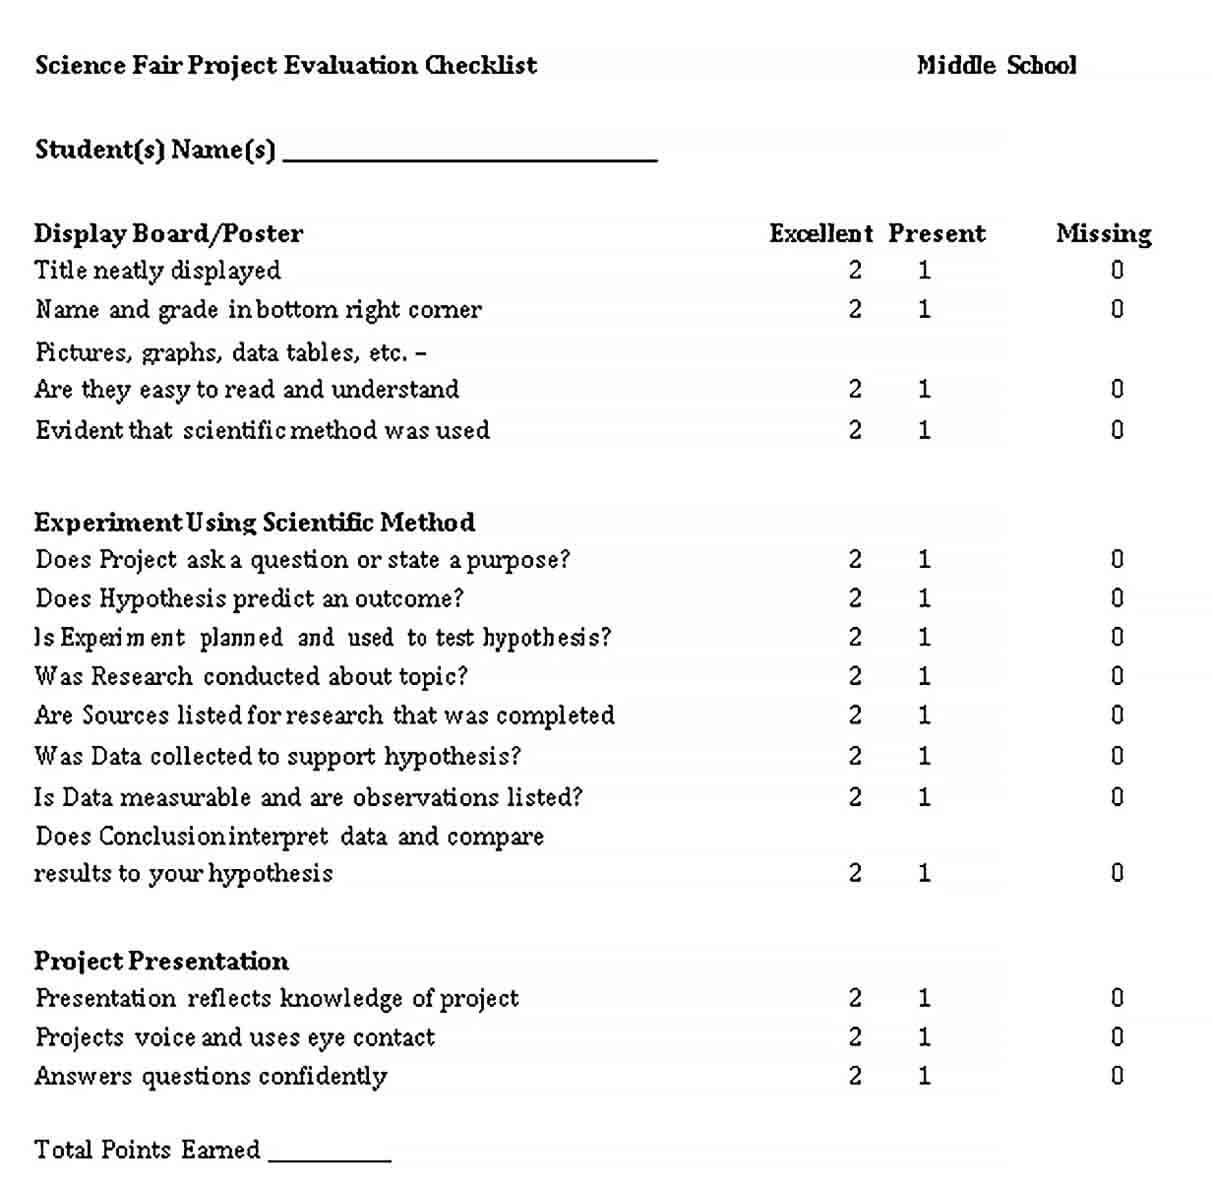 Sample Science Fair Project Evaluation Checklist